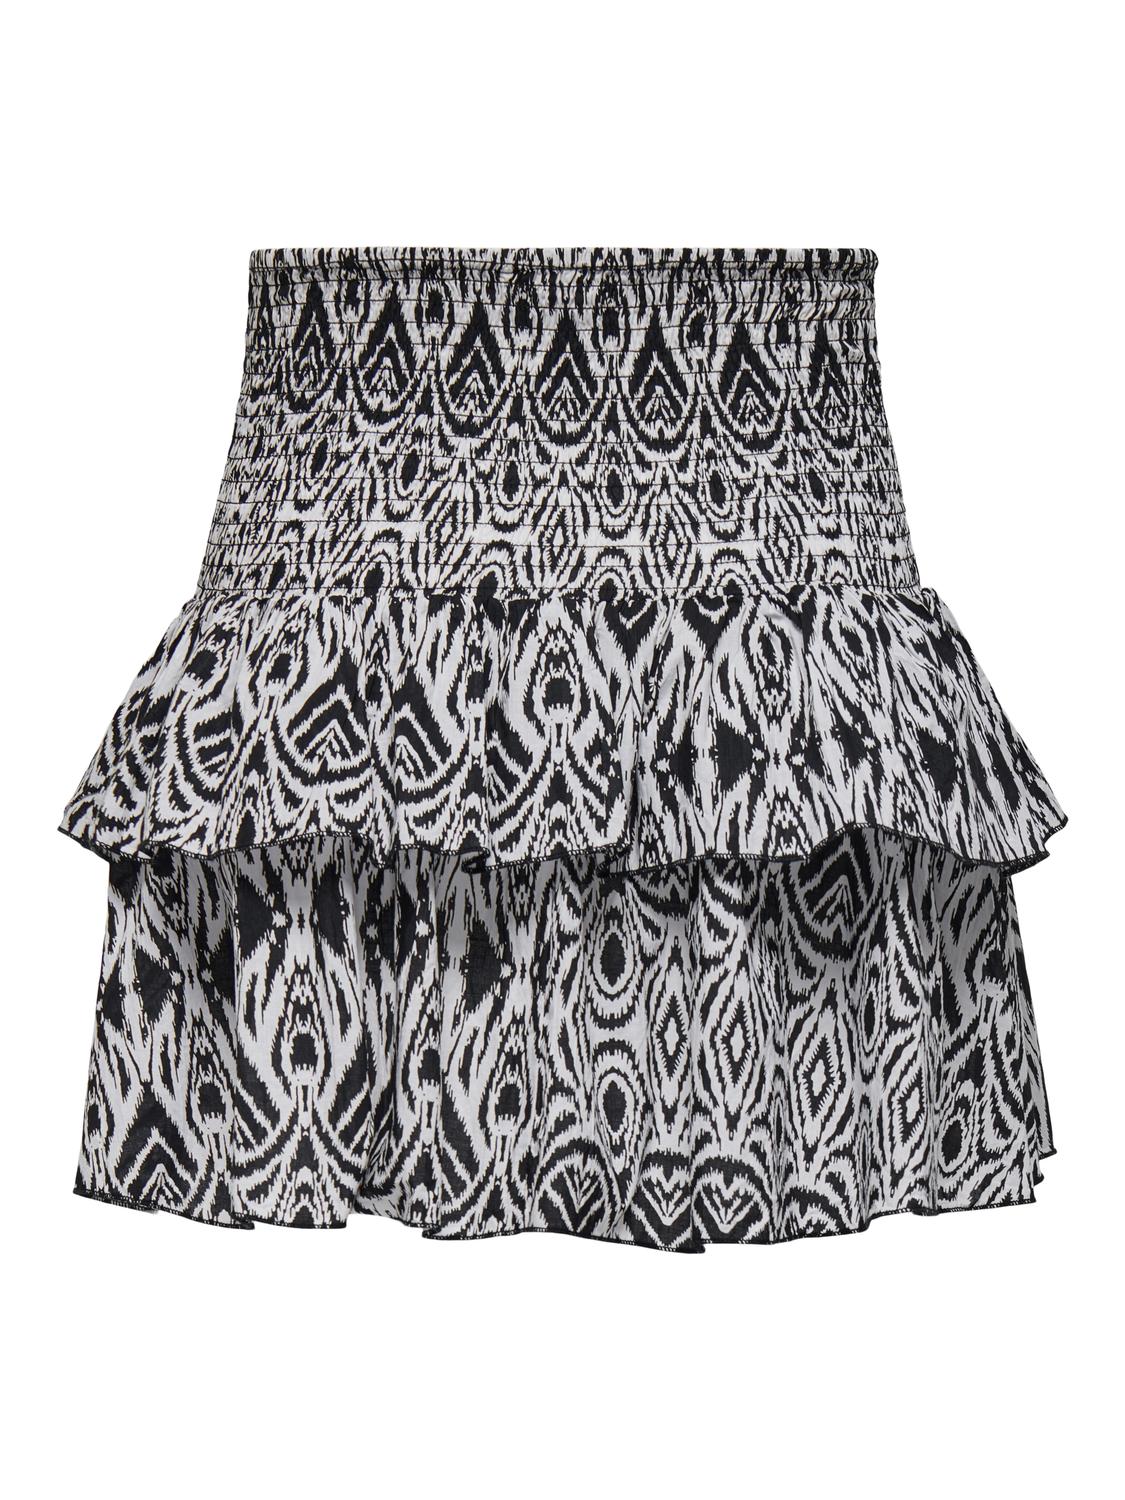 PGLALORI Short Skirt - Mønstret